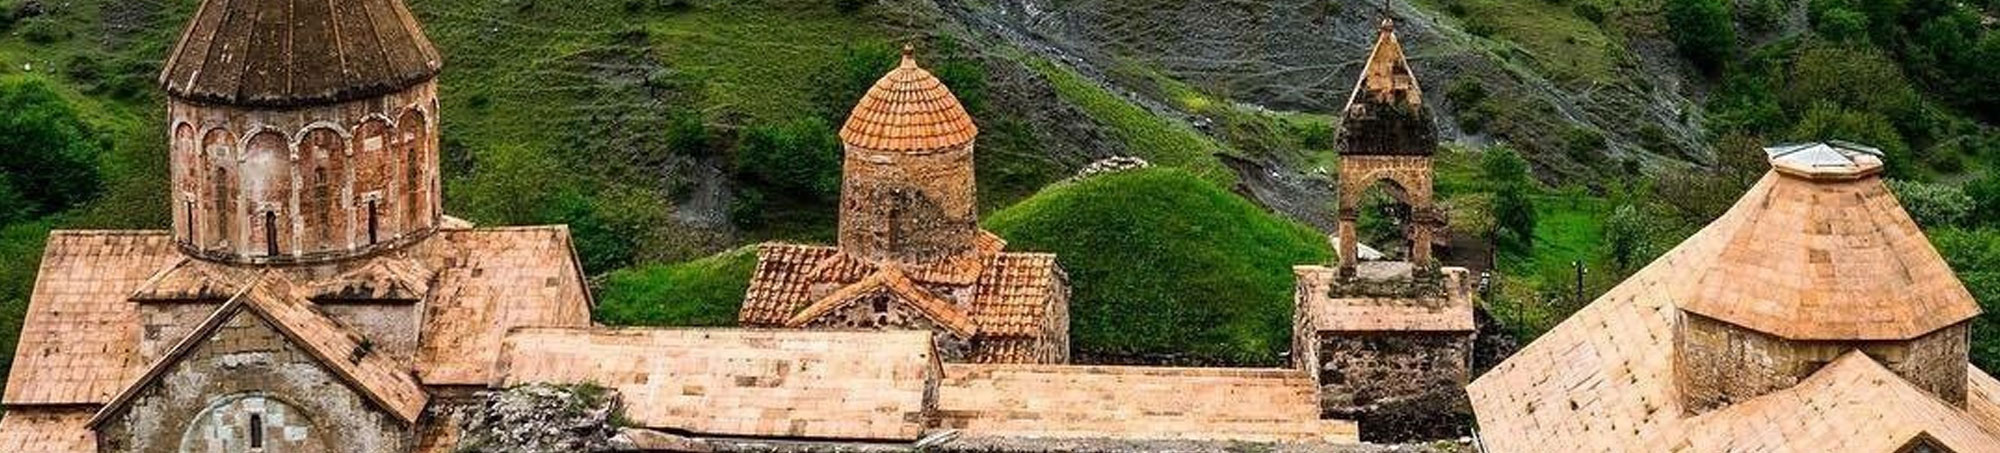 Dadivank Monastery - Armenian Cultural Heritage. Artsakh (Nagorno Karabakh)